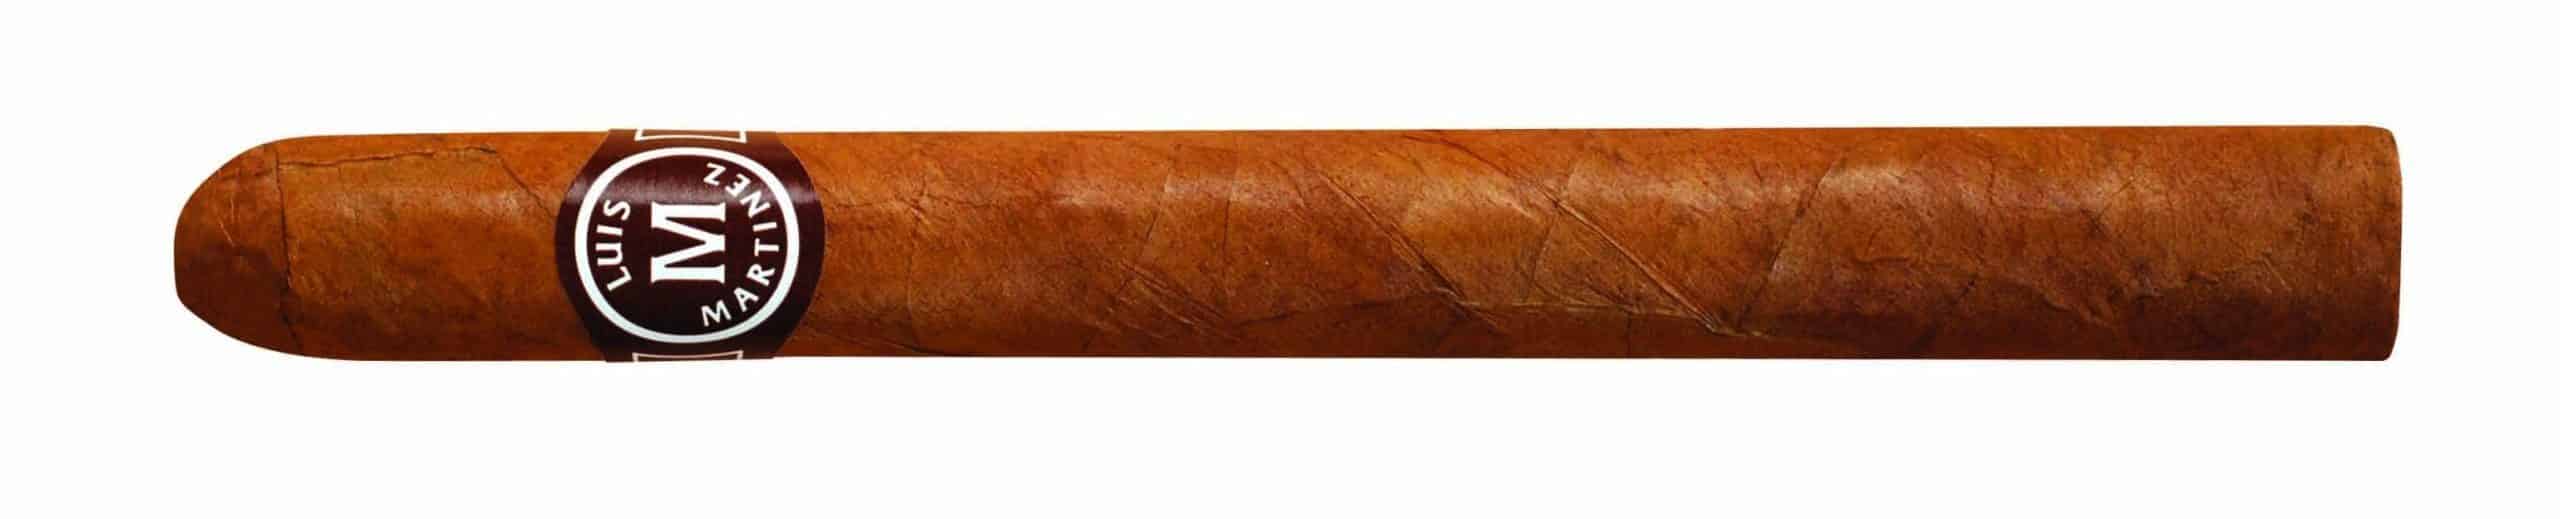 luis martinez palma natural single cigar